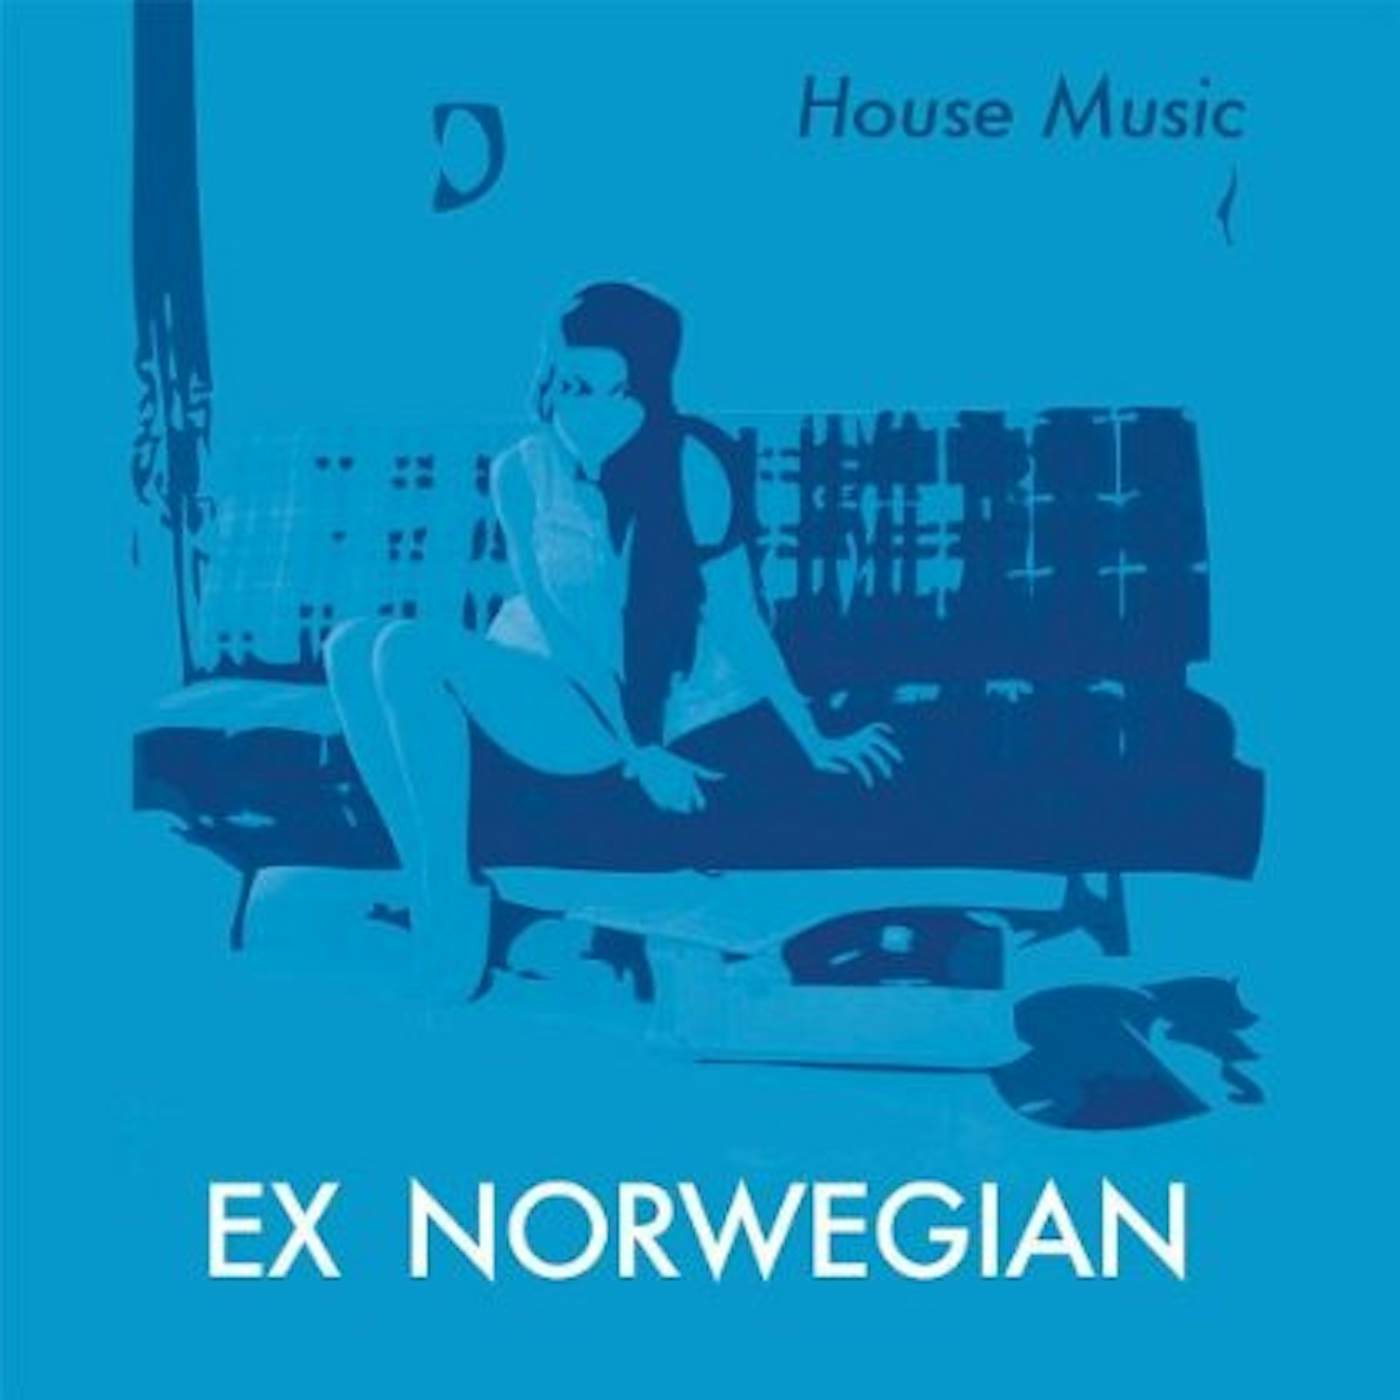 Ex Norwegian HOUSE MUSIC CD